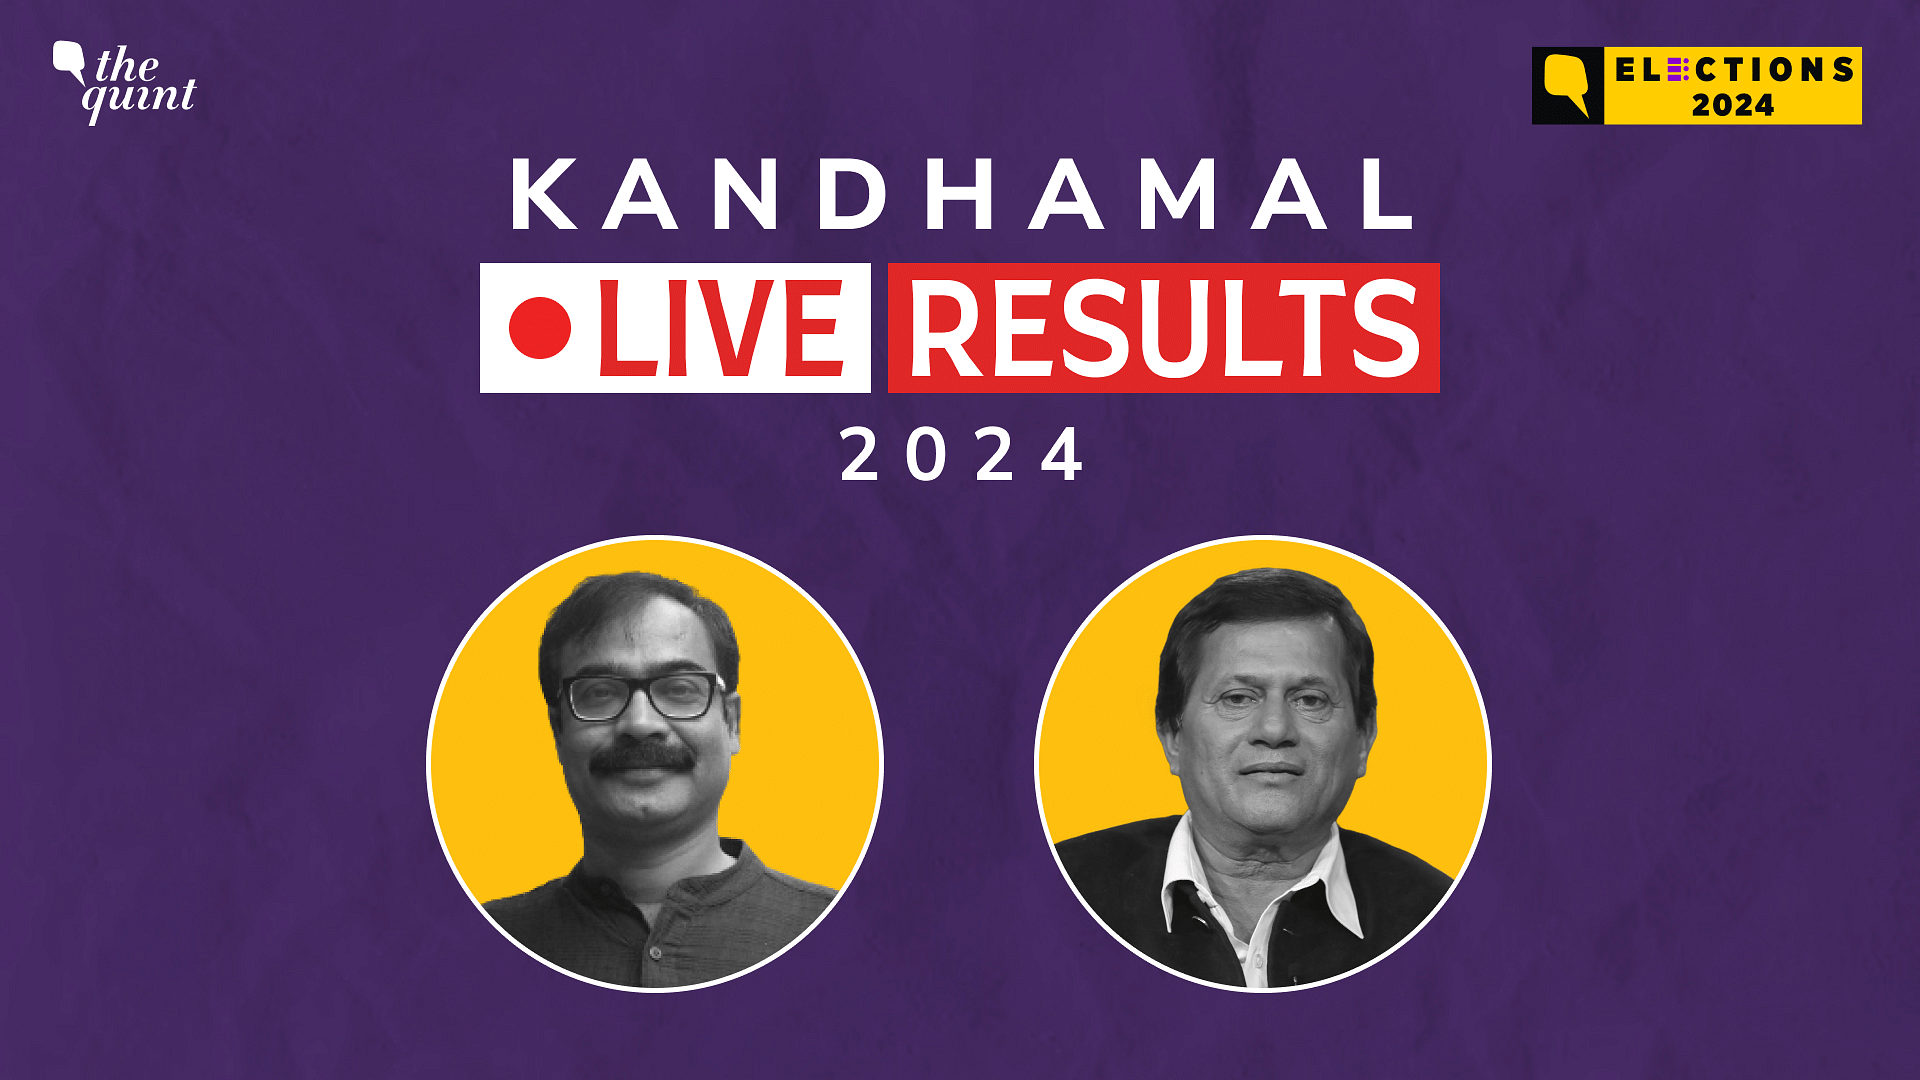 <div class="paragraphs"><p>Kandhamal Election Result live updates for Lok Sabha election 2024</p></div>